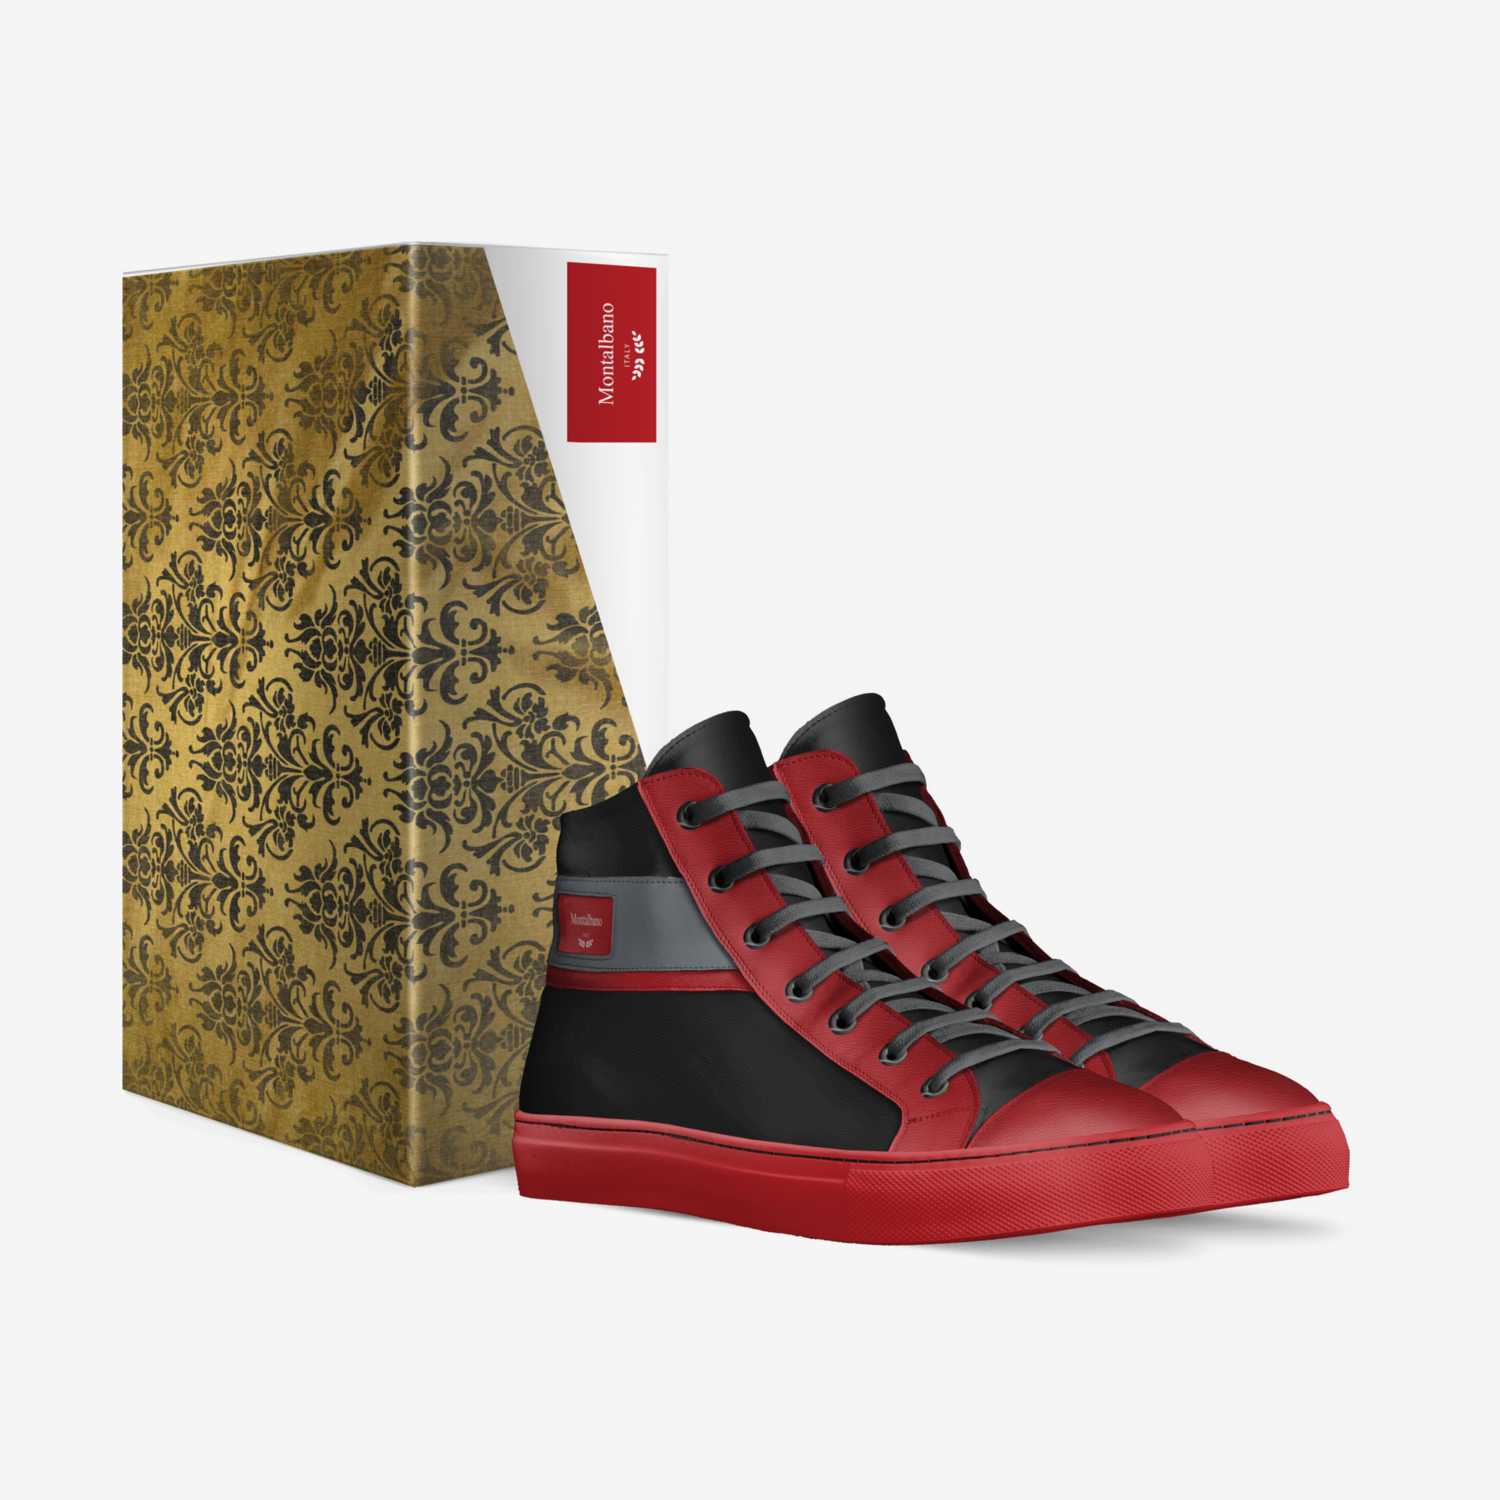 Montalbano custom made in Italy shoes by Joshua Montalbano | Box view